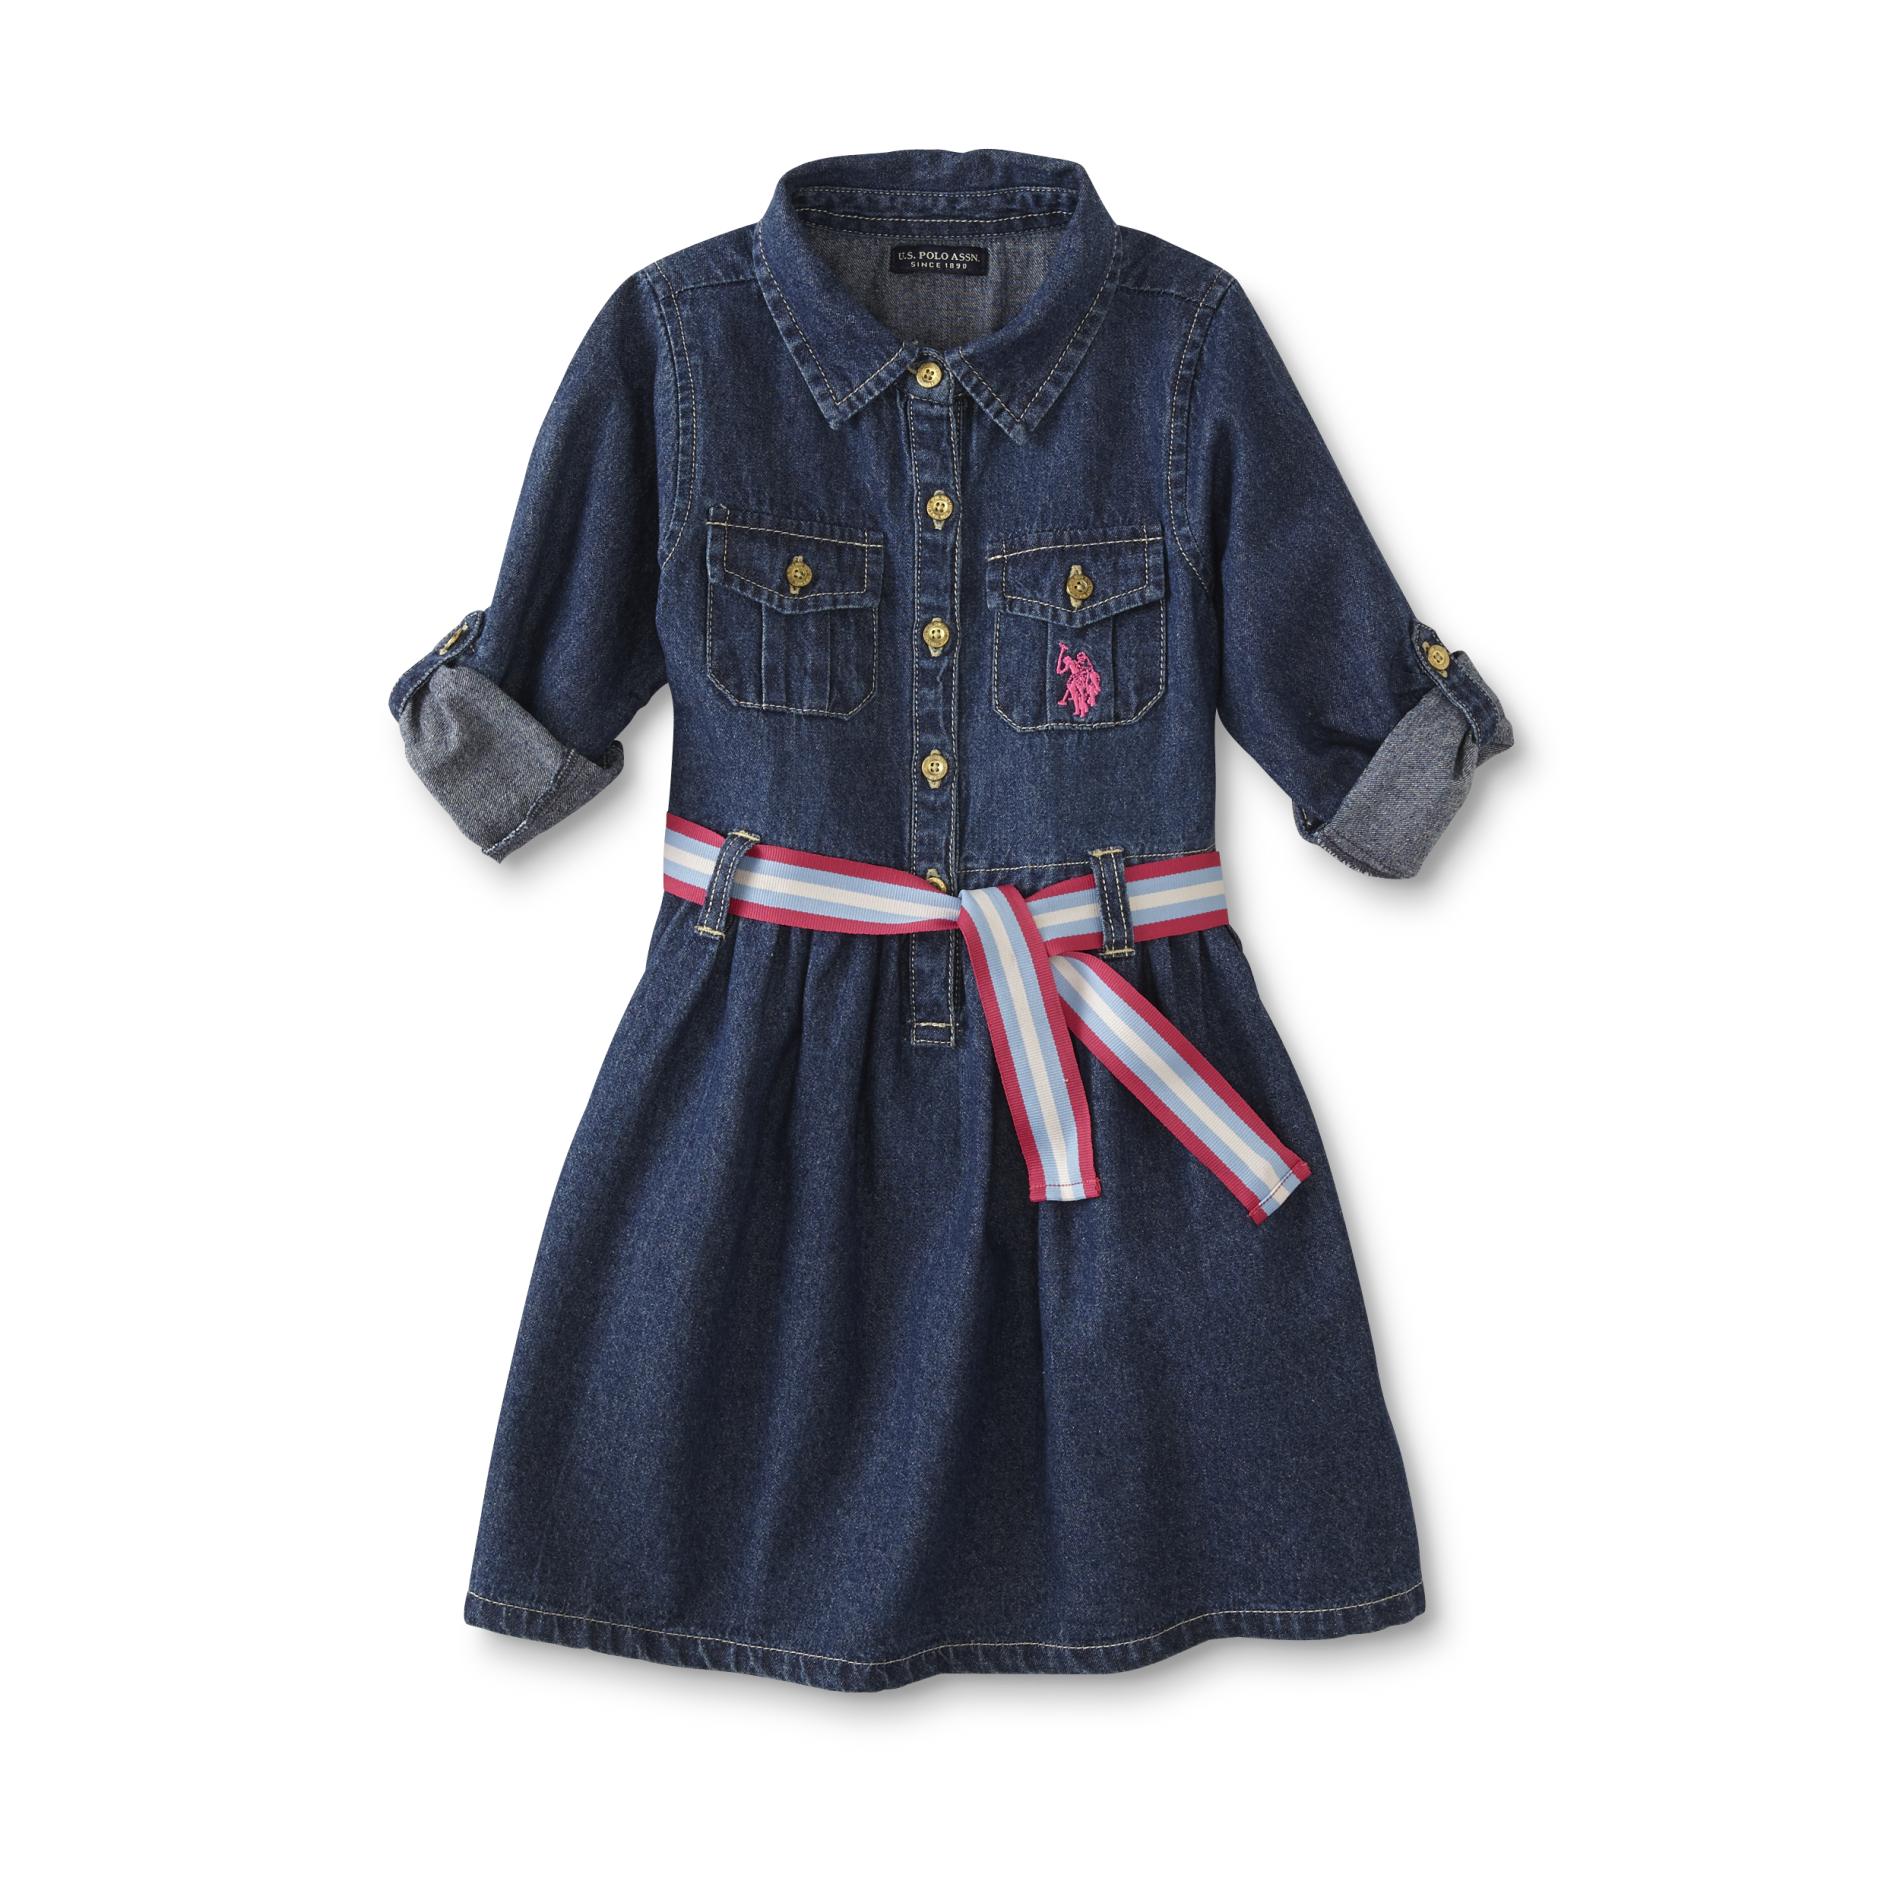 U.S. Polo Assn. Infant & Toddler Girls' Chambray Shirtdress